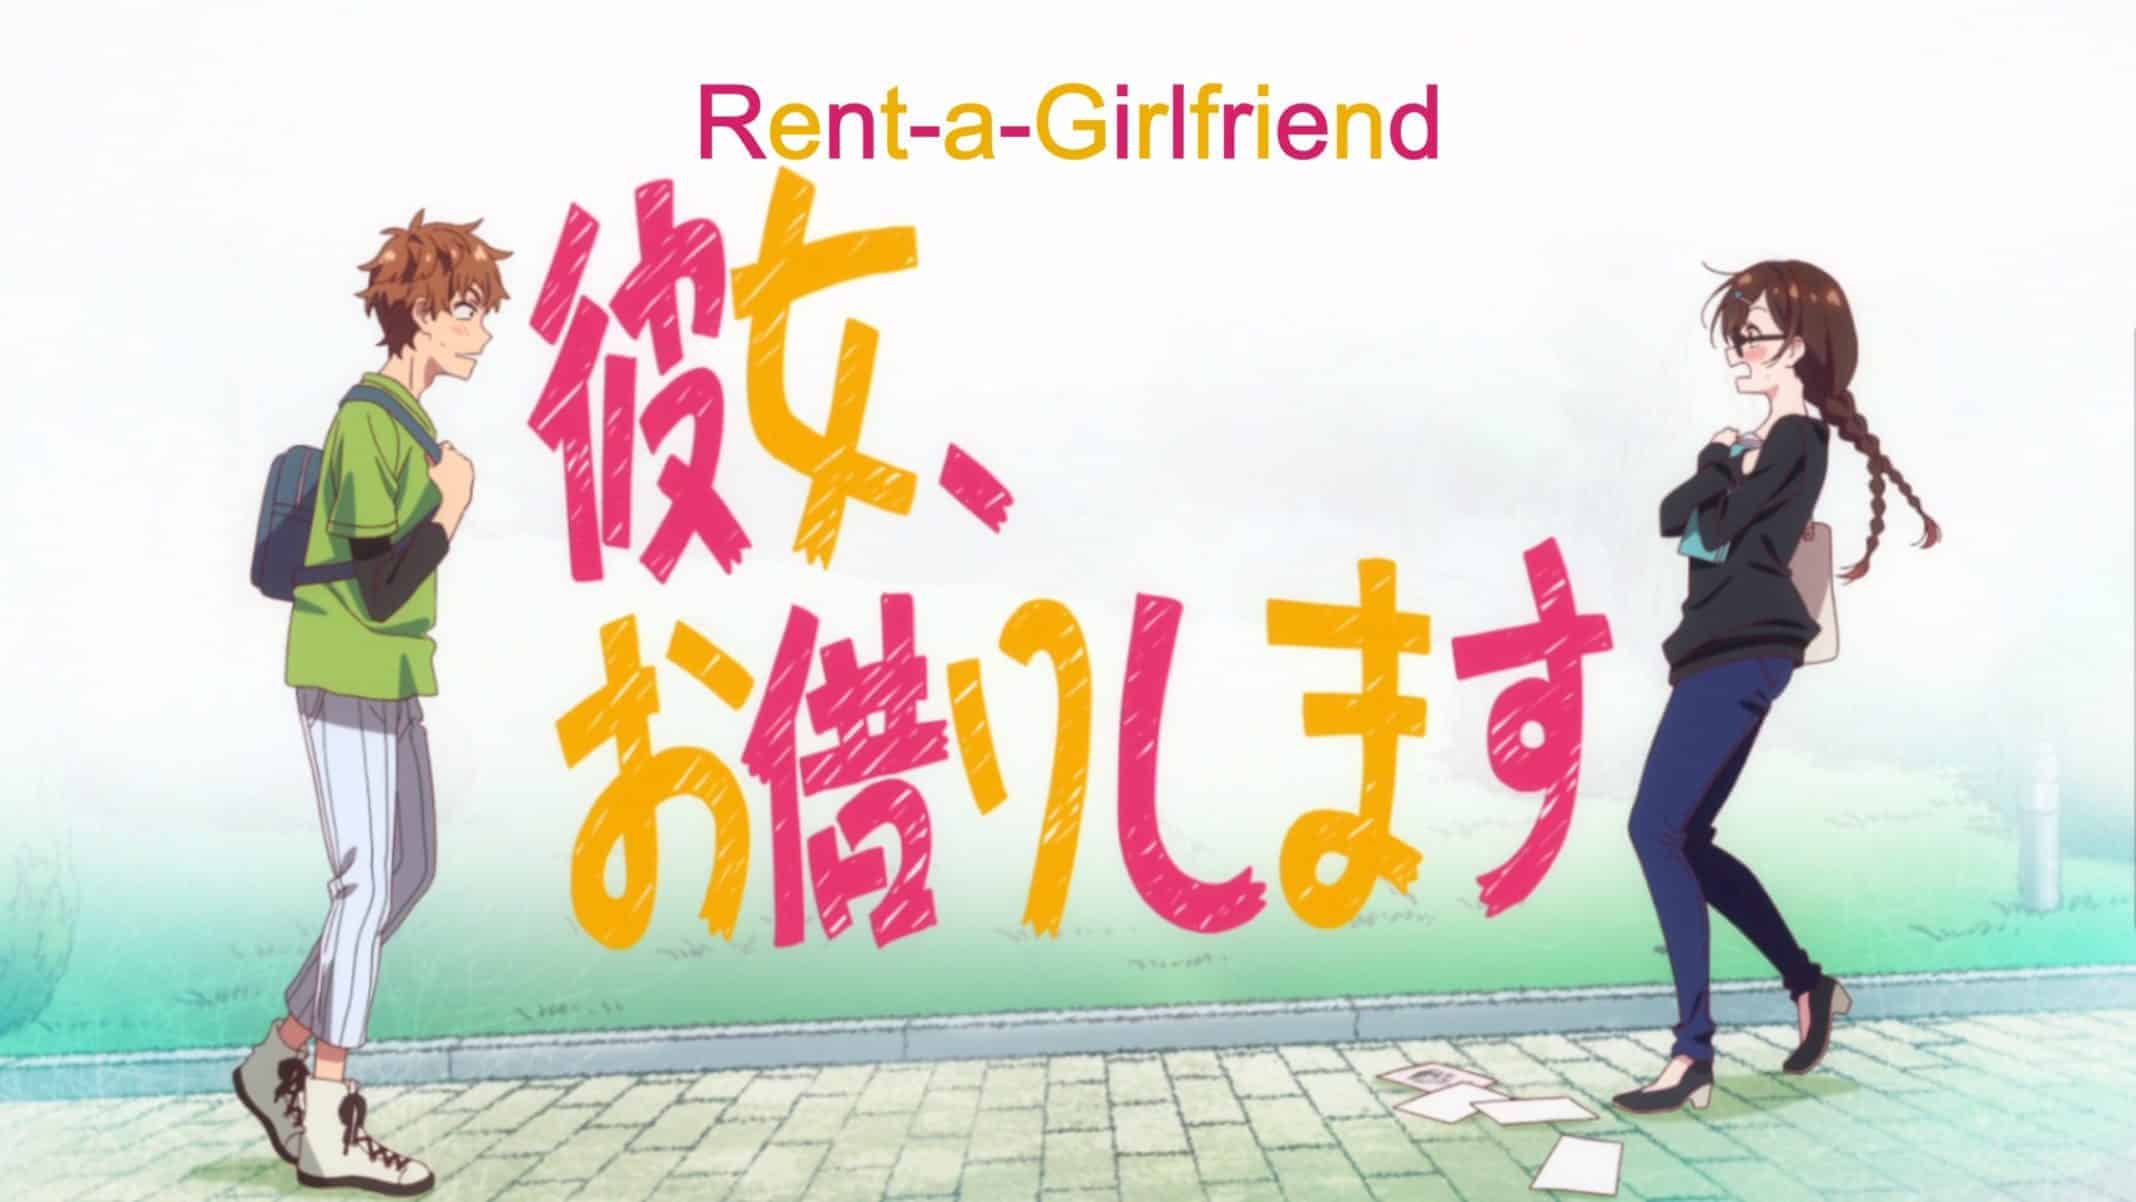 Rent-a-Girlfriend: Season 1 Episode 1 “Rent-a-Girlfriend” [Series Premiere] – Recap/ Review with Spoilers